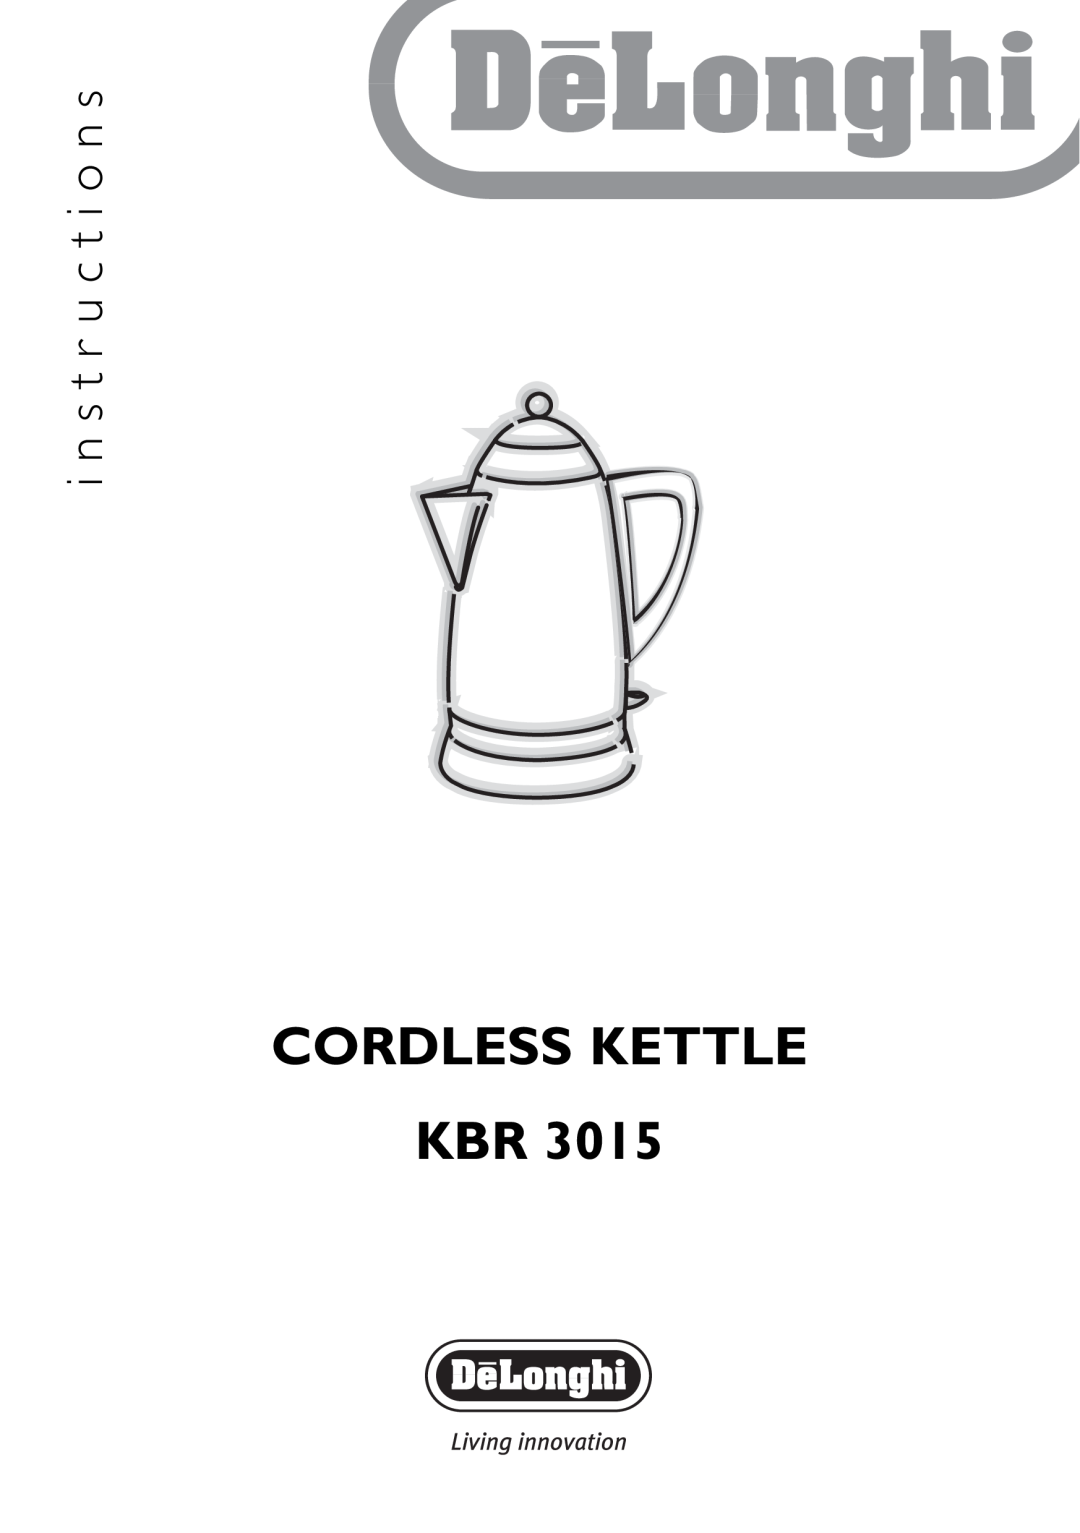 DeLonghi KBR 3015 manual Cordless Kettle, i n s t r u c t i o n s 